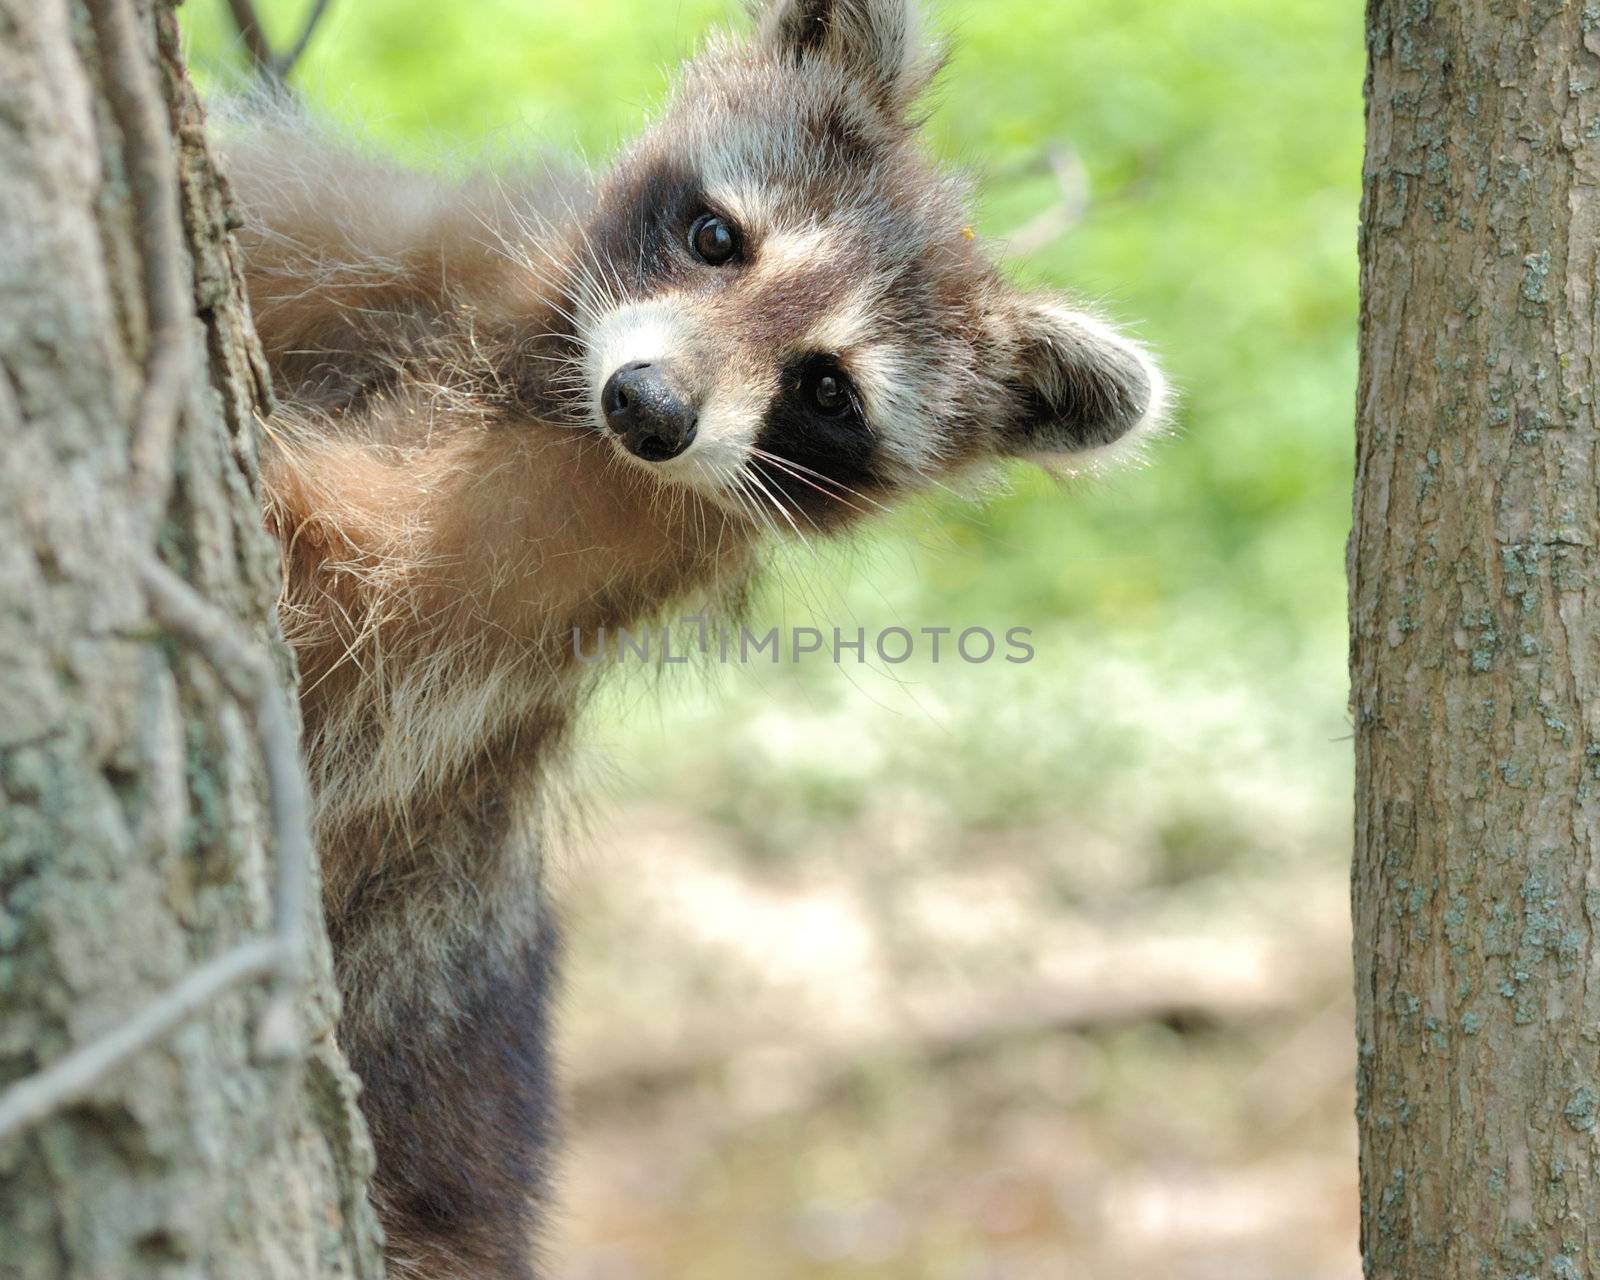 Head shot of a young raccoon peeking around a tree trunk.